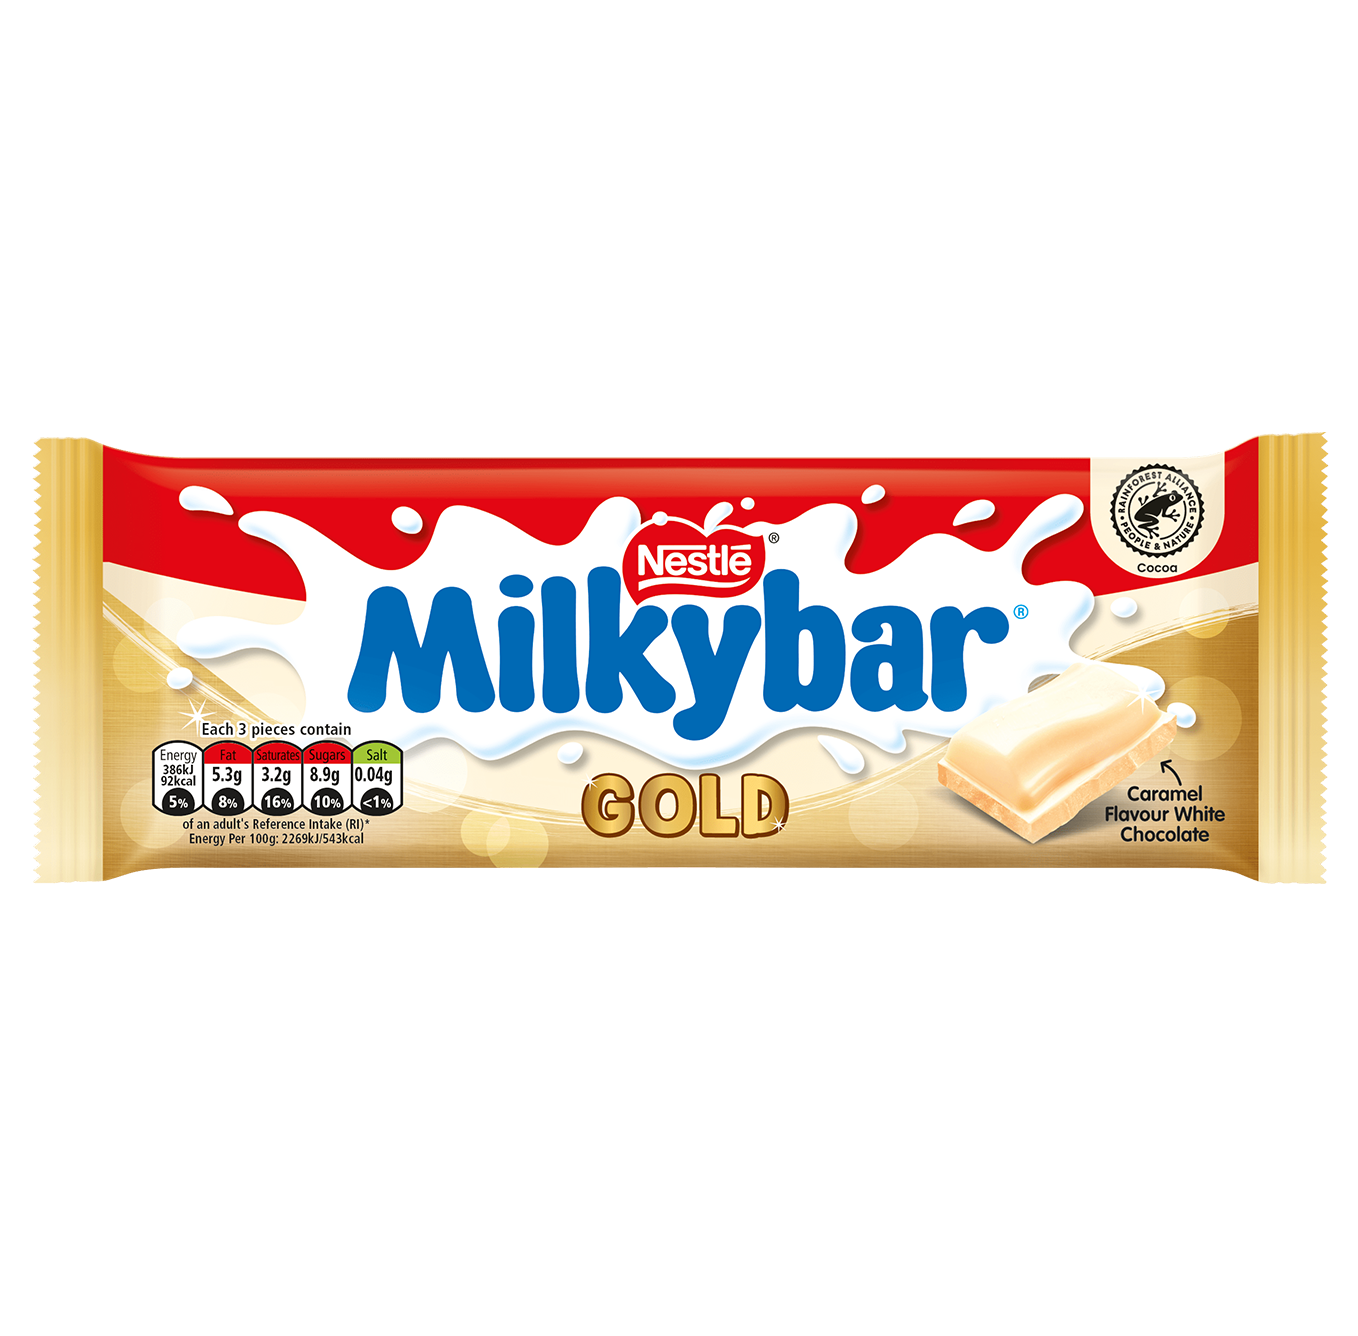 NEW! Milkybar® Gold White Chocolate Sharing Bar 85g